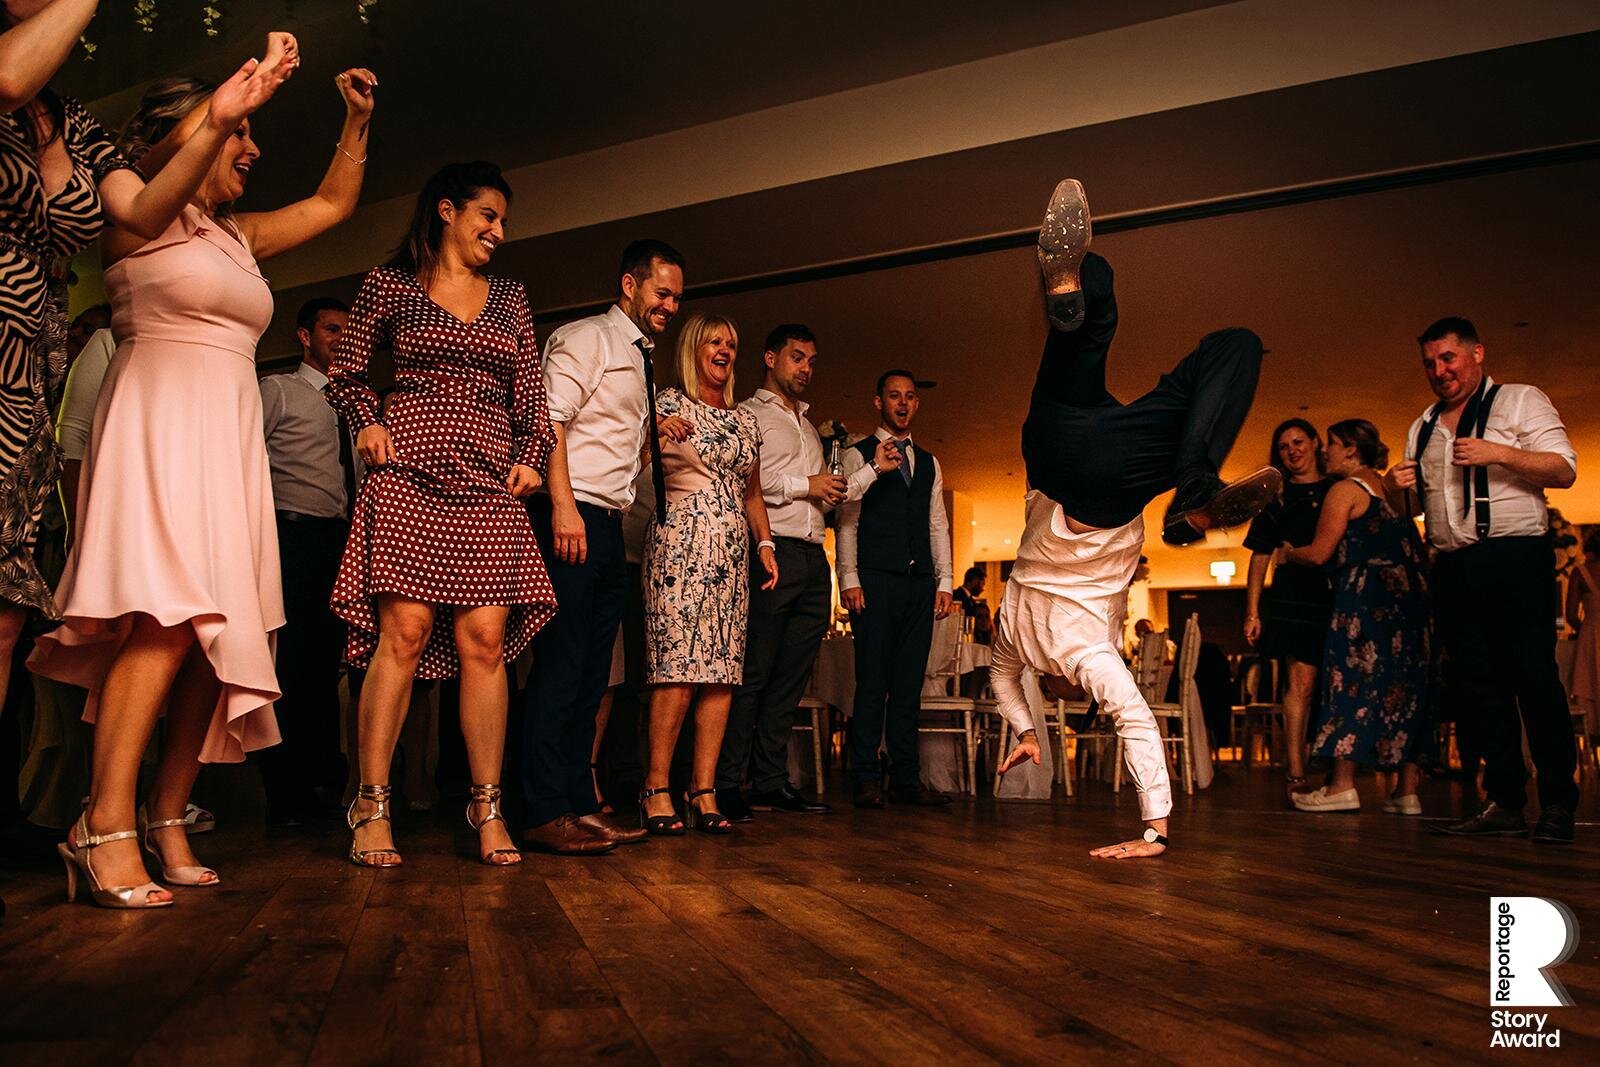  Man attempts a cartwheel on the dance floor. 